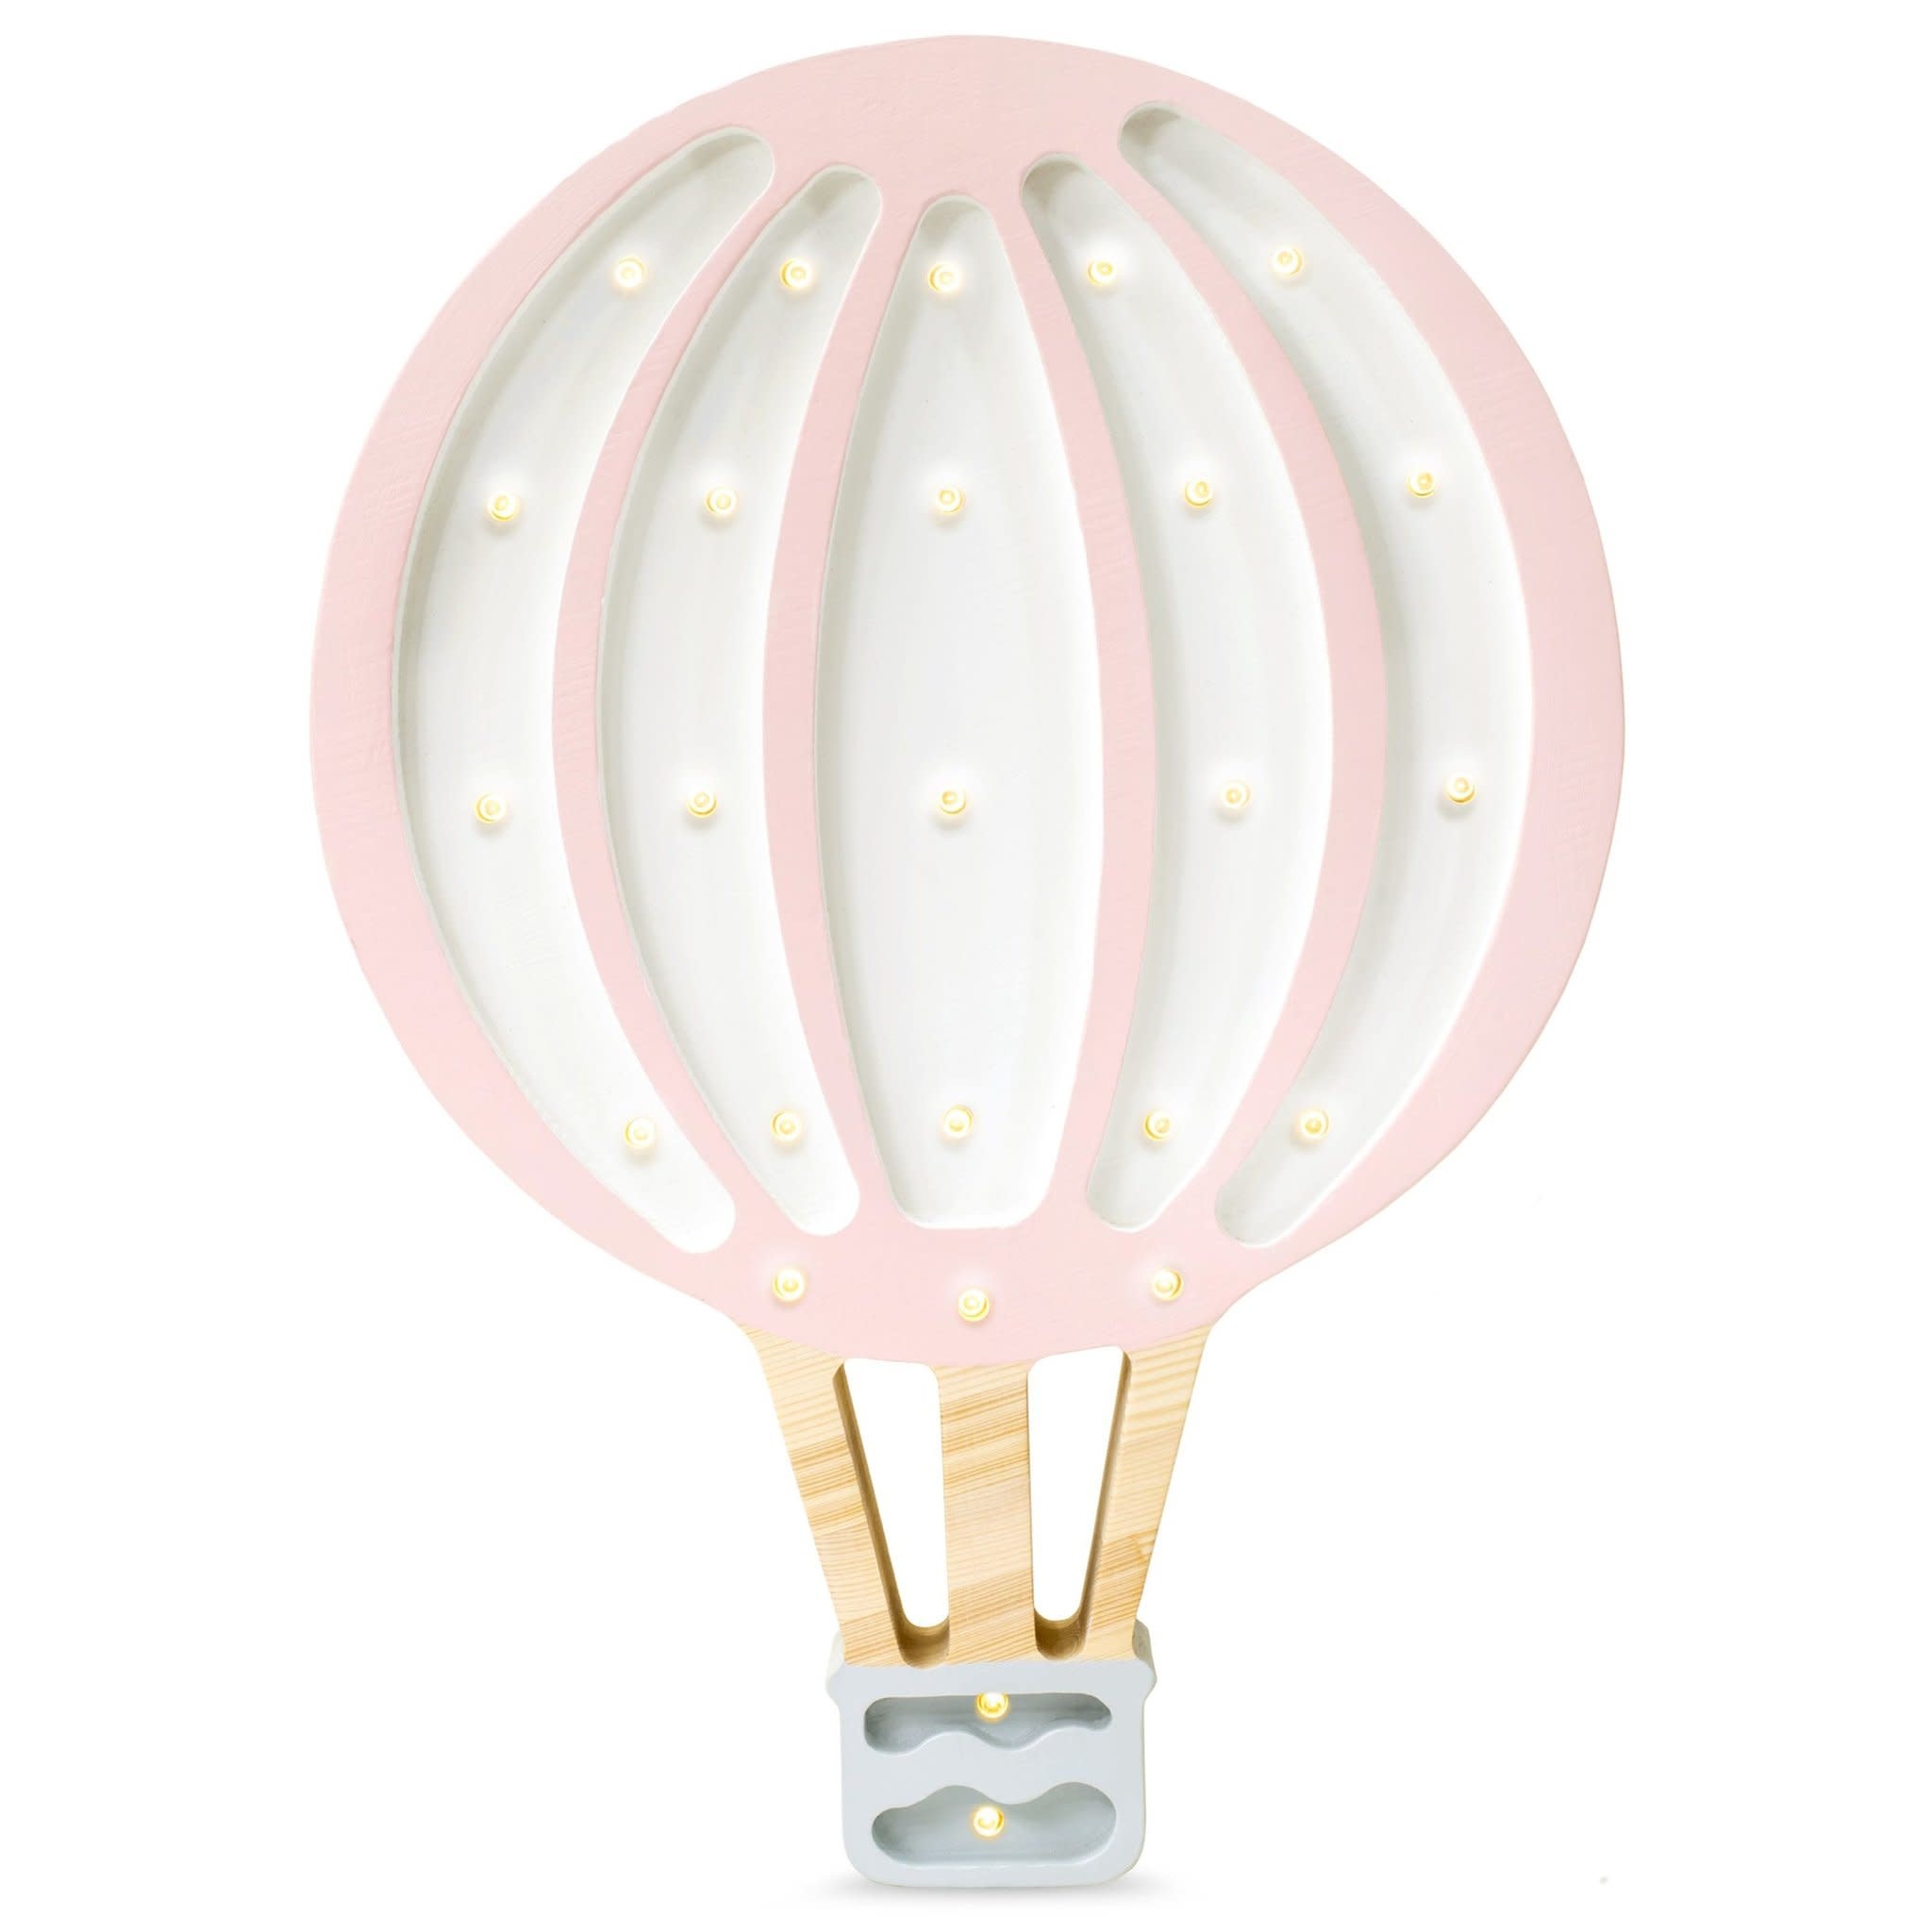 Little Lights, Night light for the children's room, Pink hot air balloon 